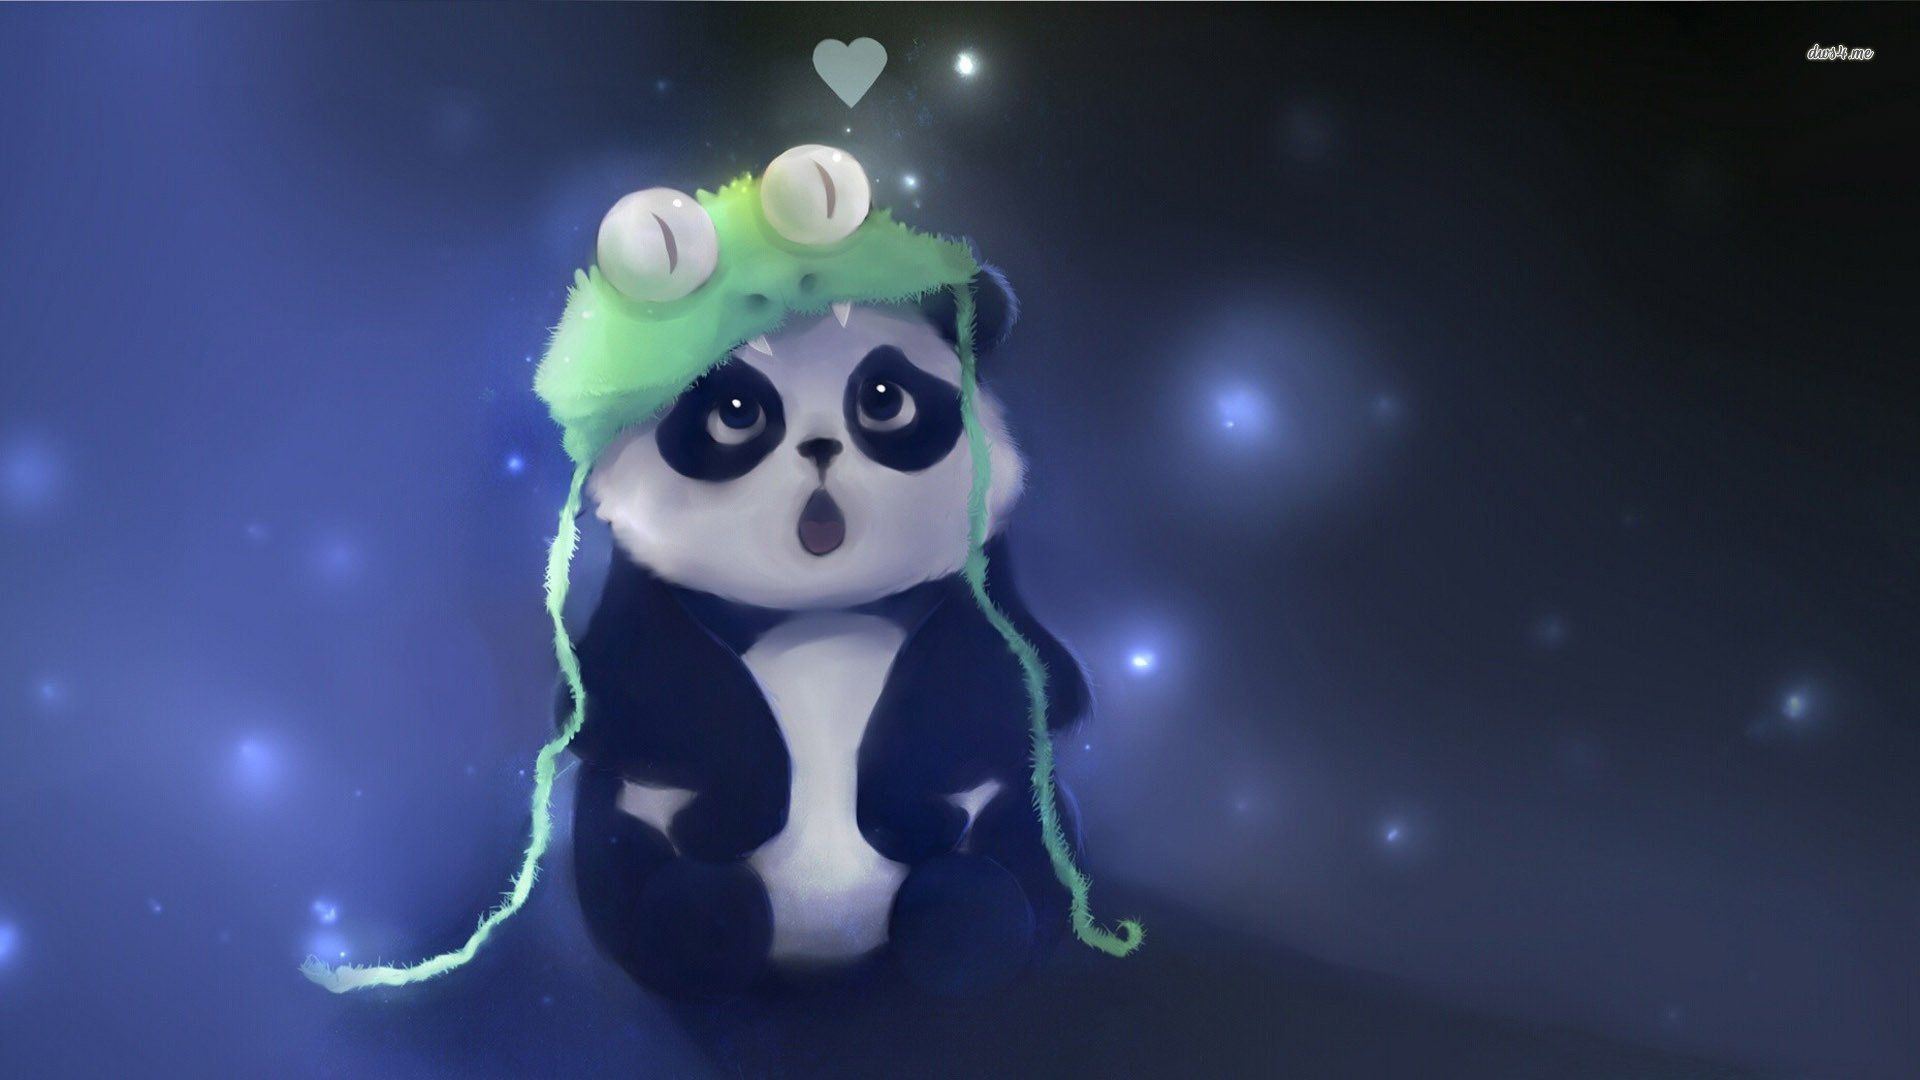 A panda bear wearing green hat and glasses - Panda